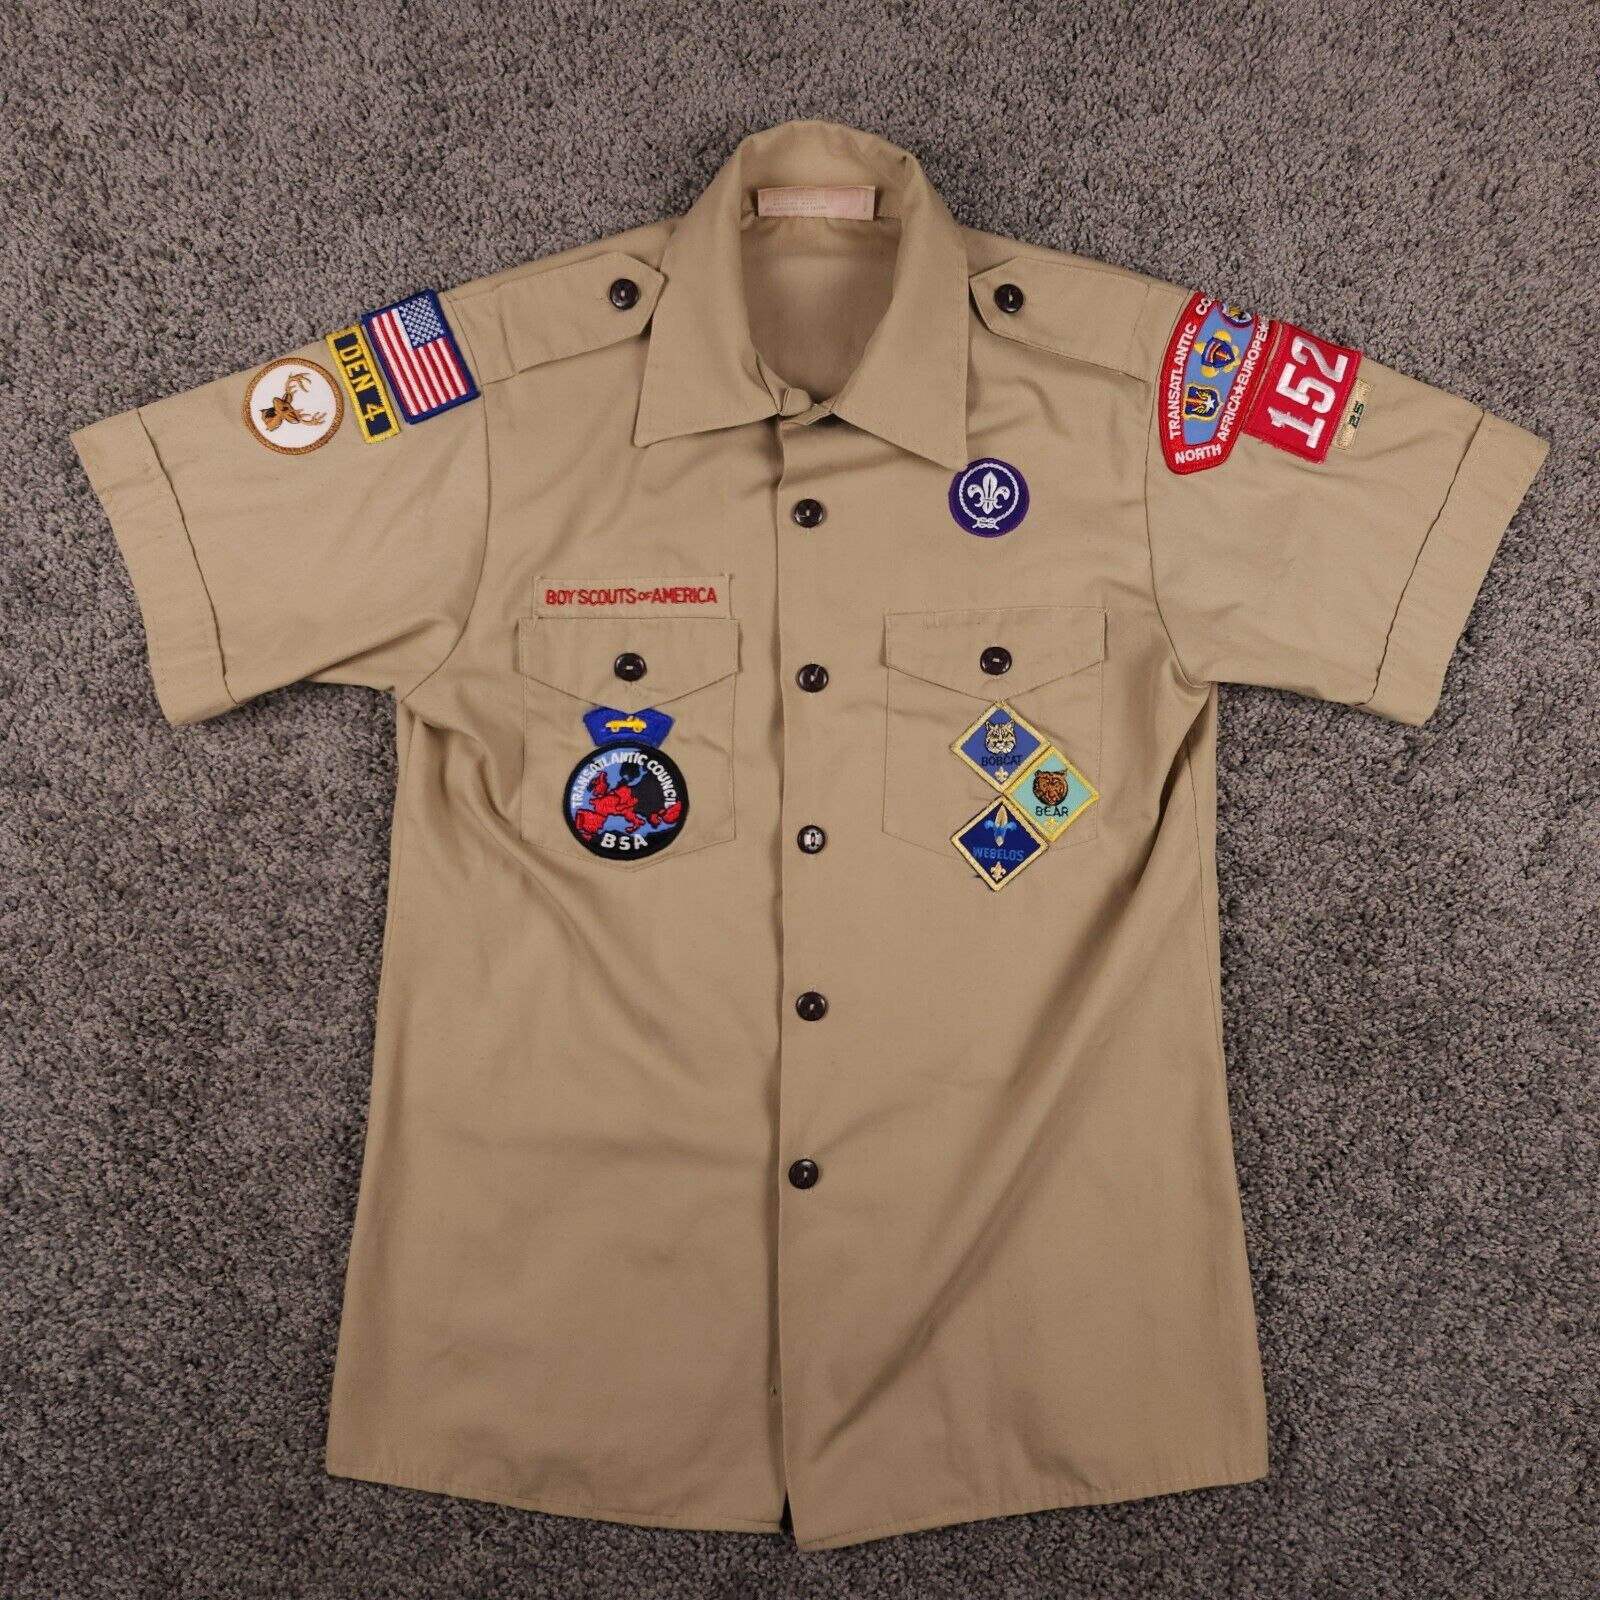 Vtg Boy Scouts Uniform Shirt Youth L (14-16) Khaki USA Made Patches BSA